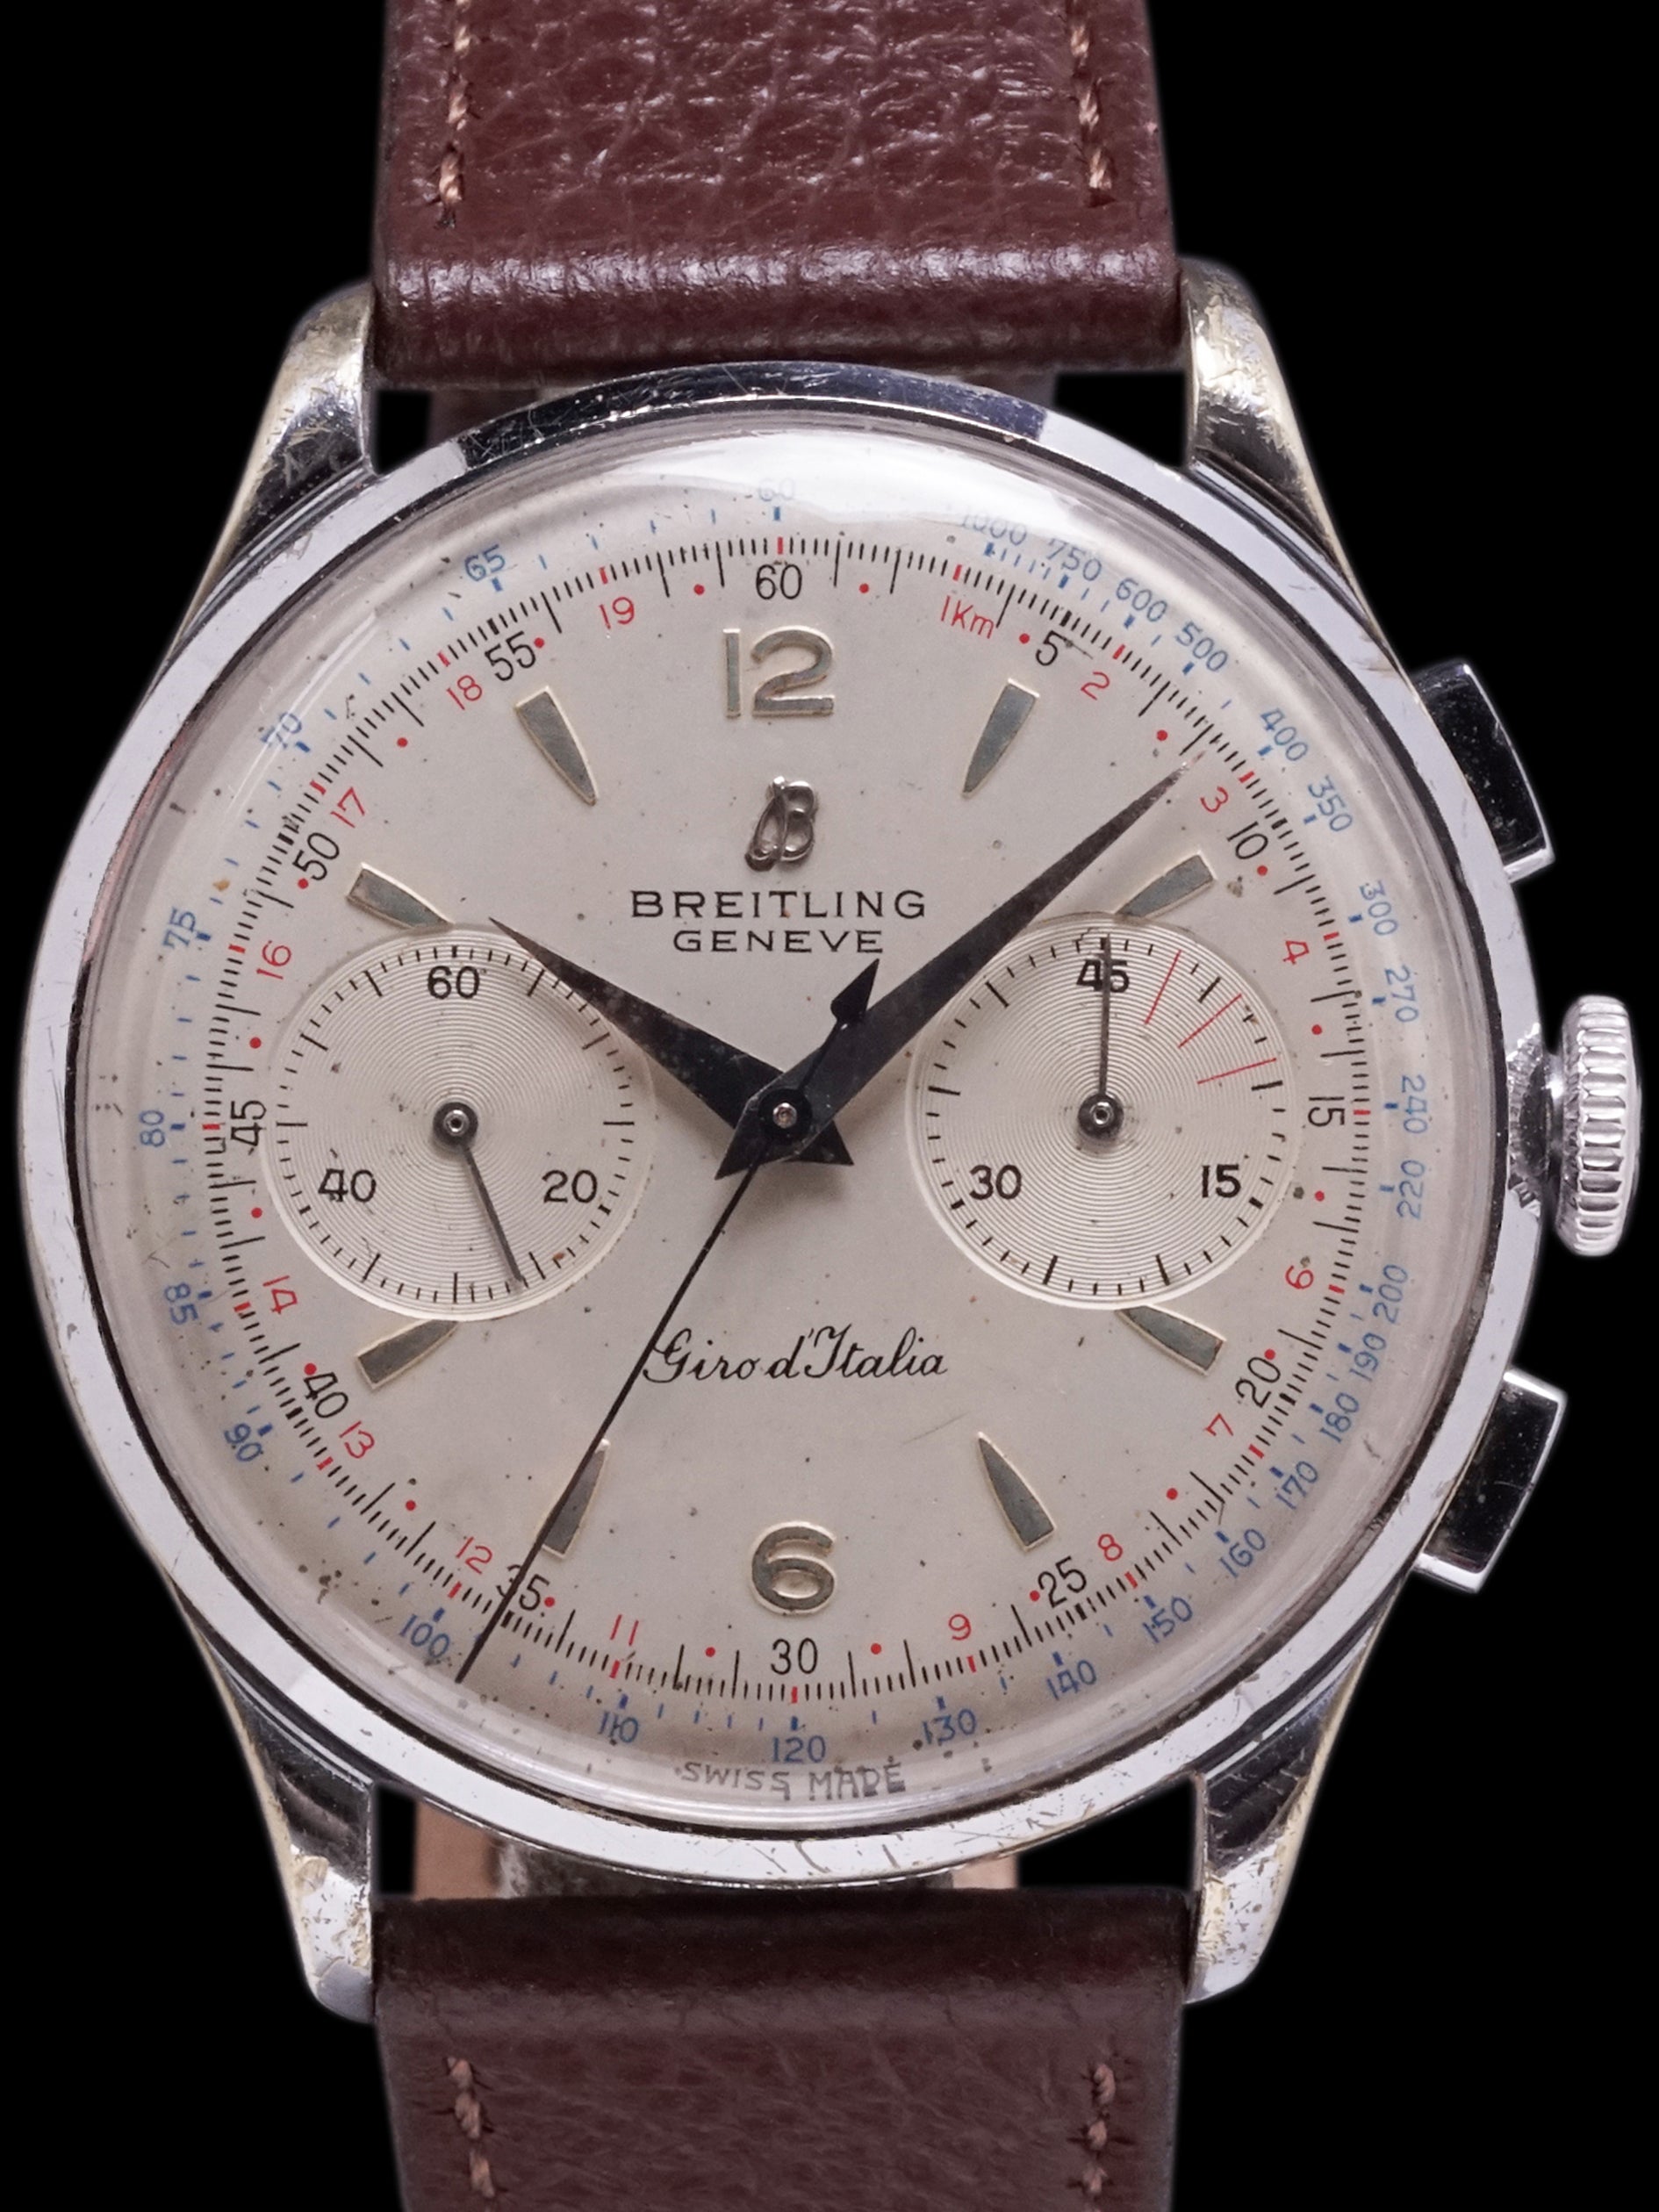 1955 Breitling Premier Chronograph (Ref. 1190) "Giro D'Italia"